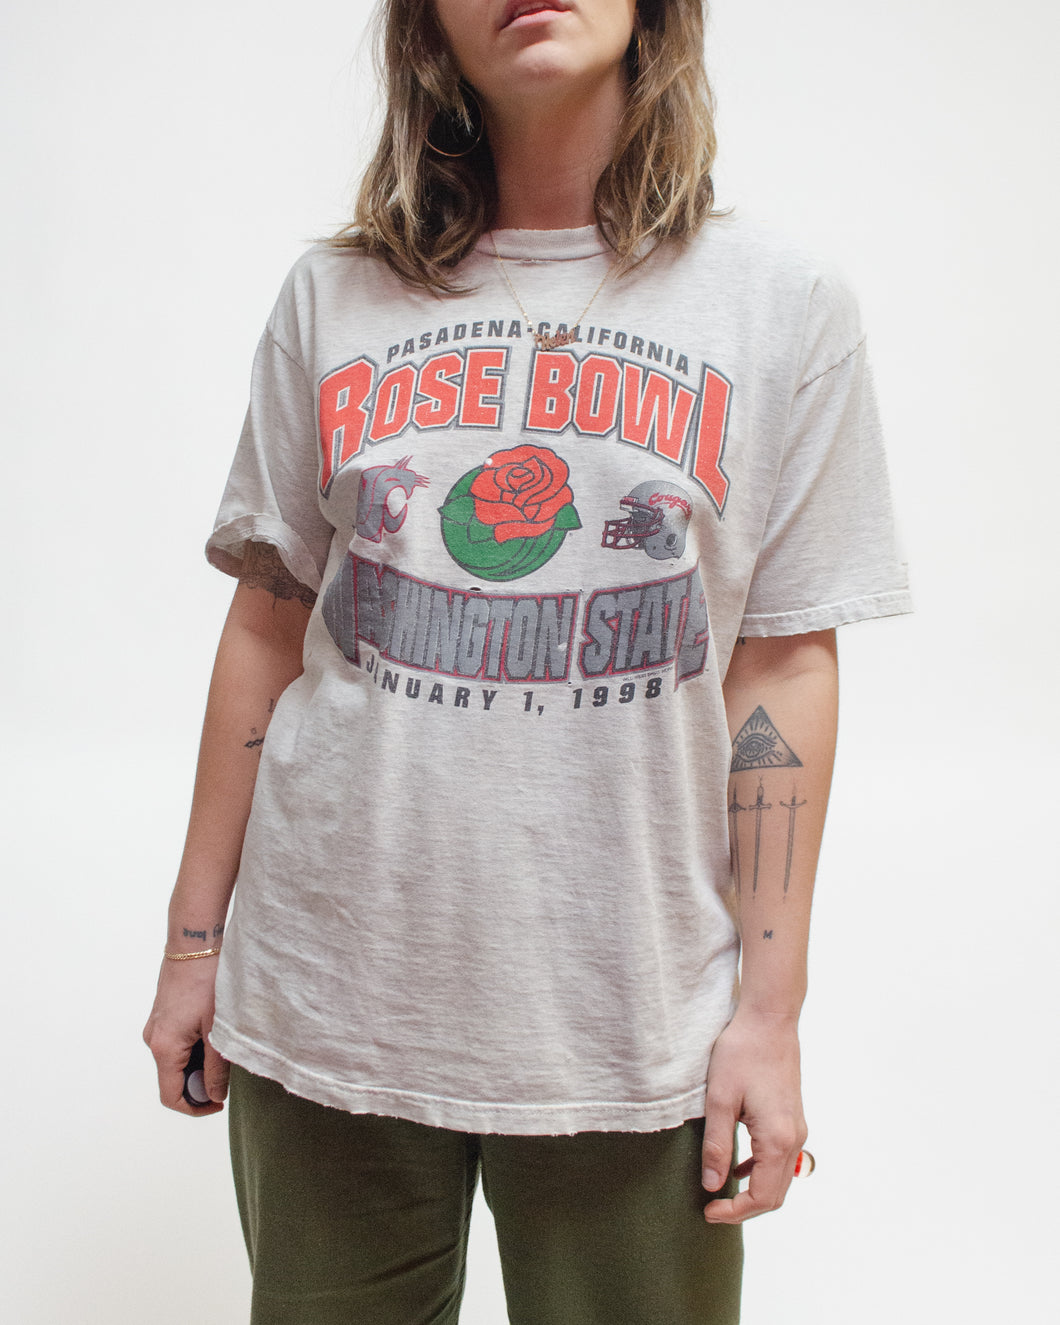 Rose Bowl ‘98 t-shirt